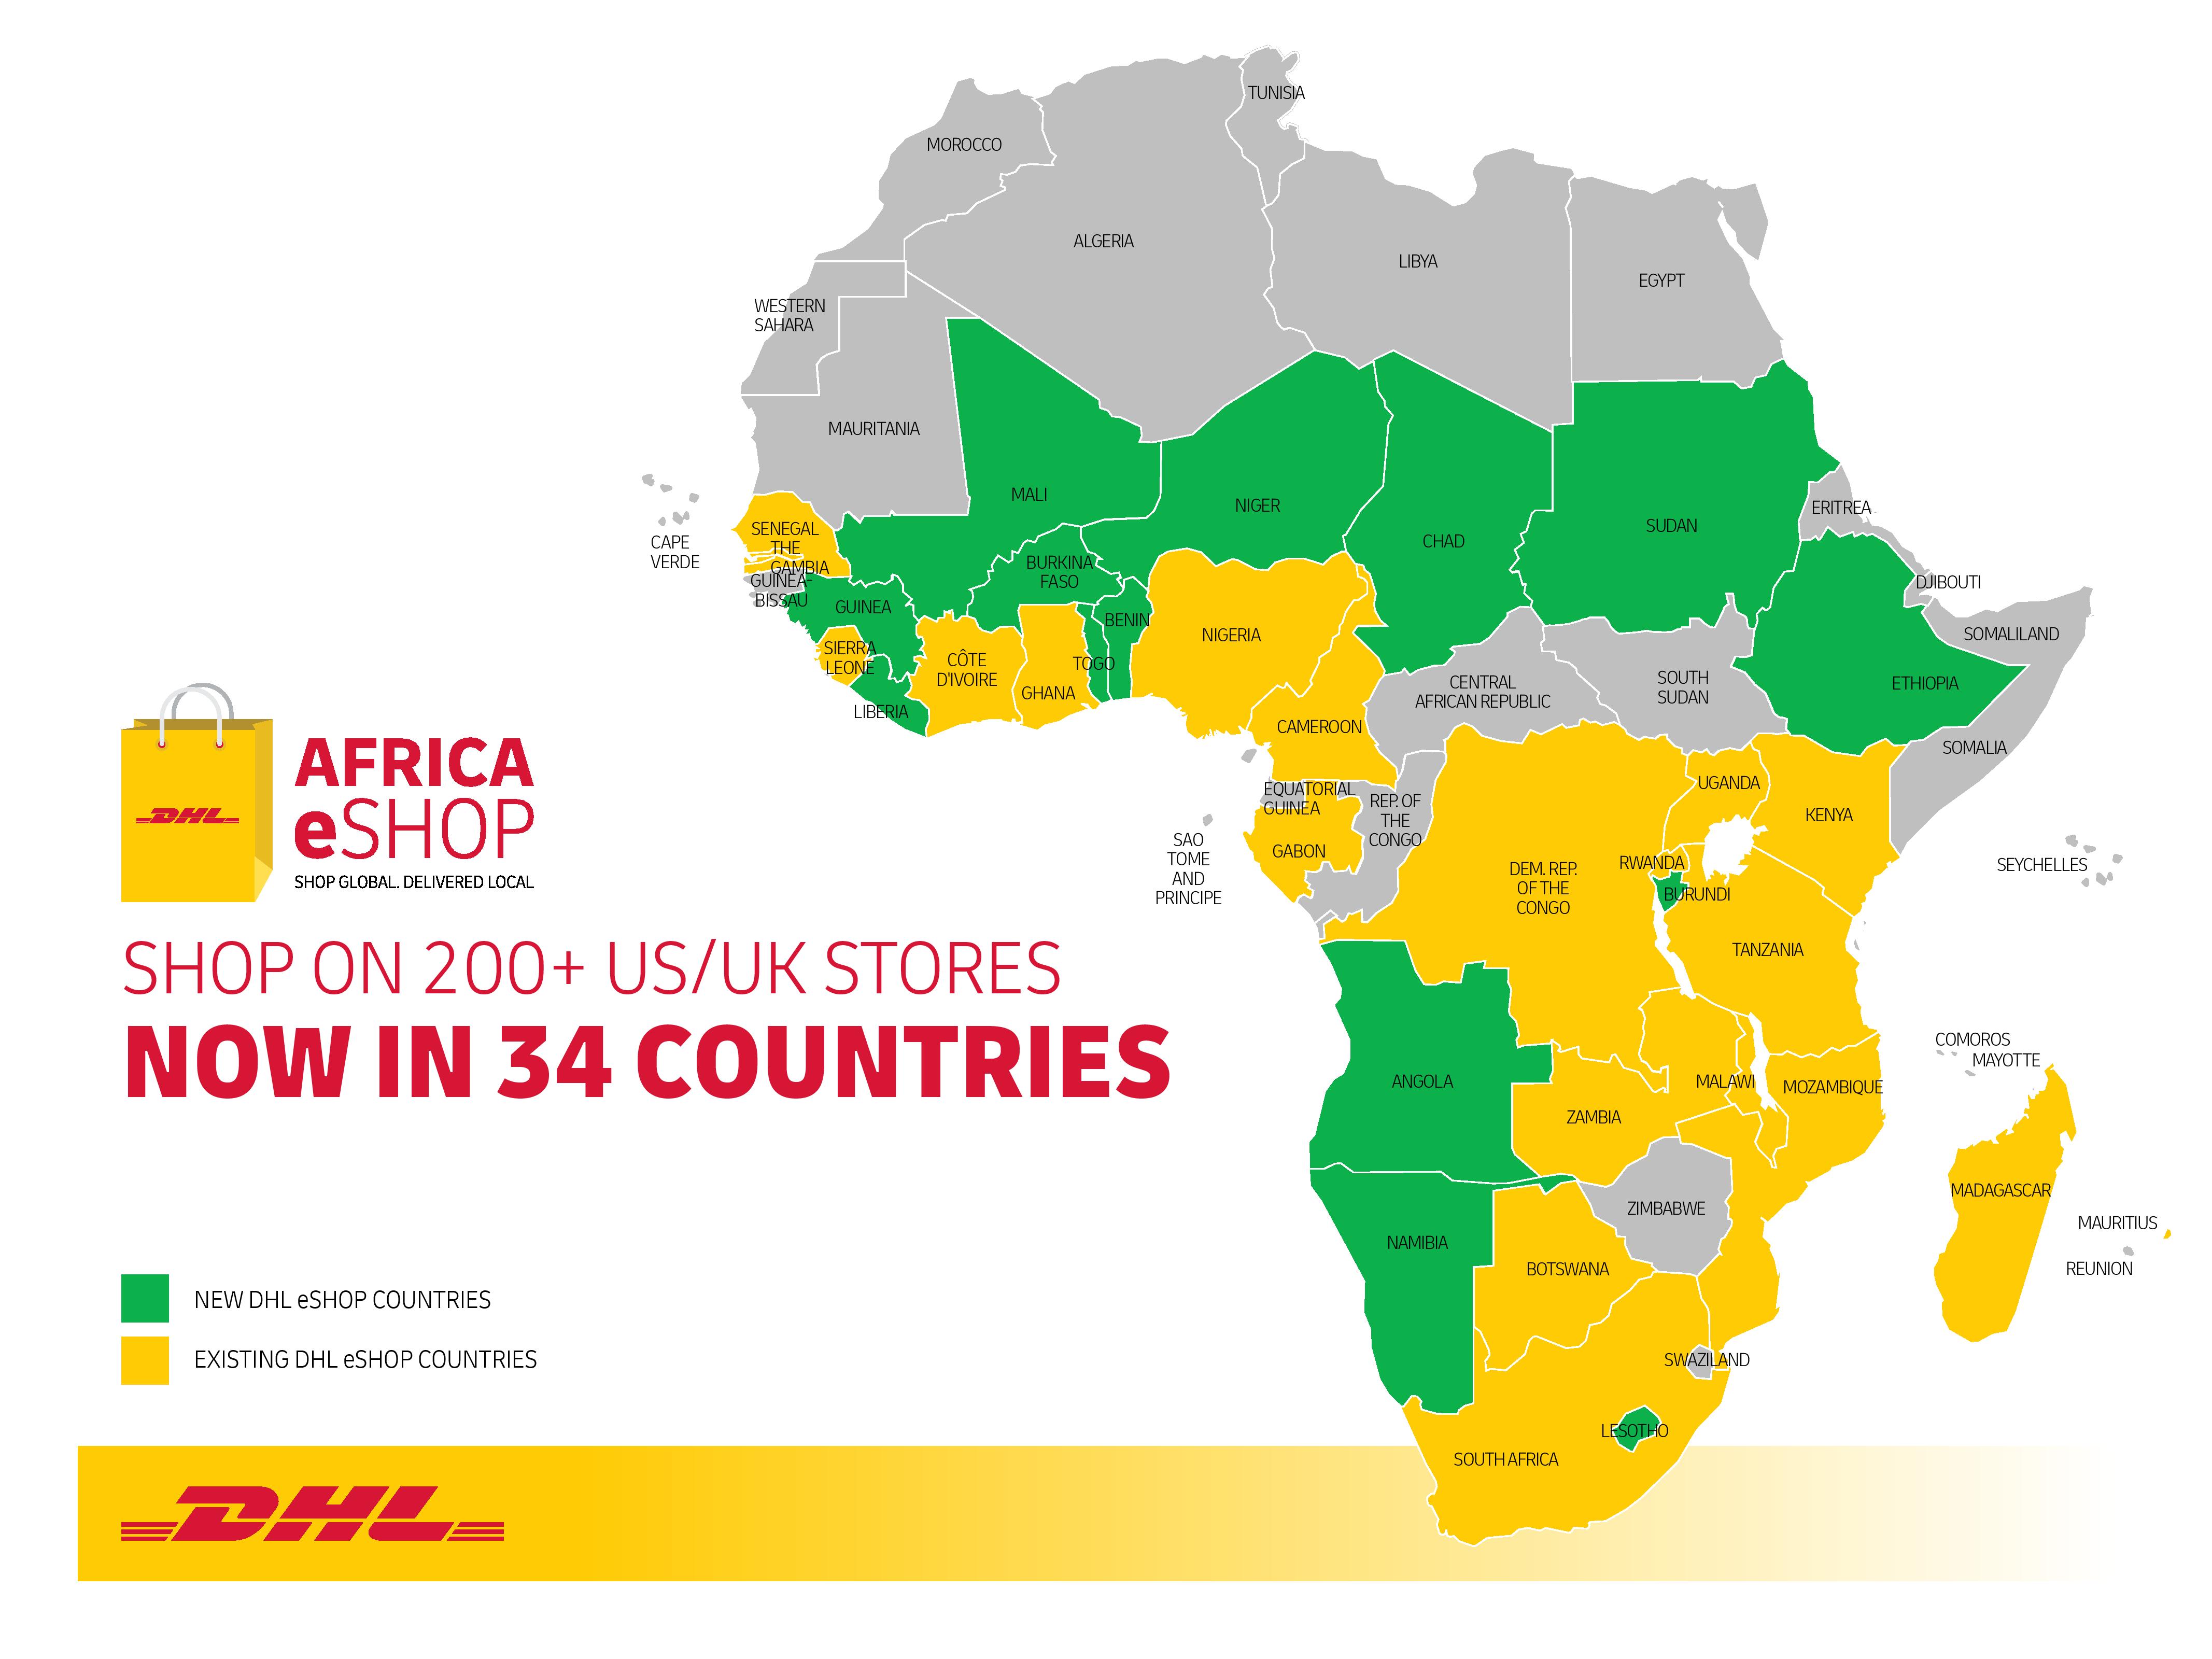 DHL expands eShop to 34 countries across Sub Saharan Africa